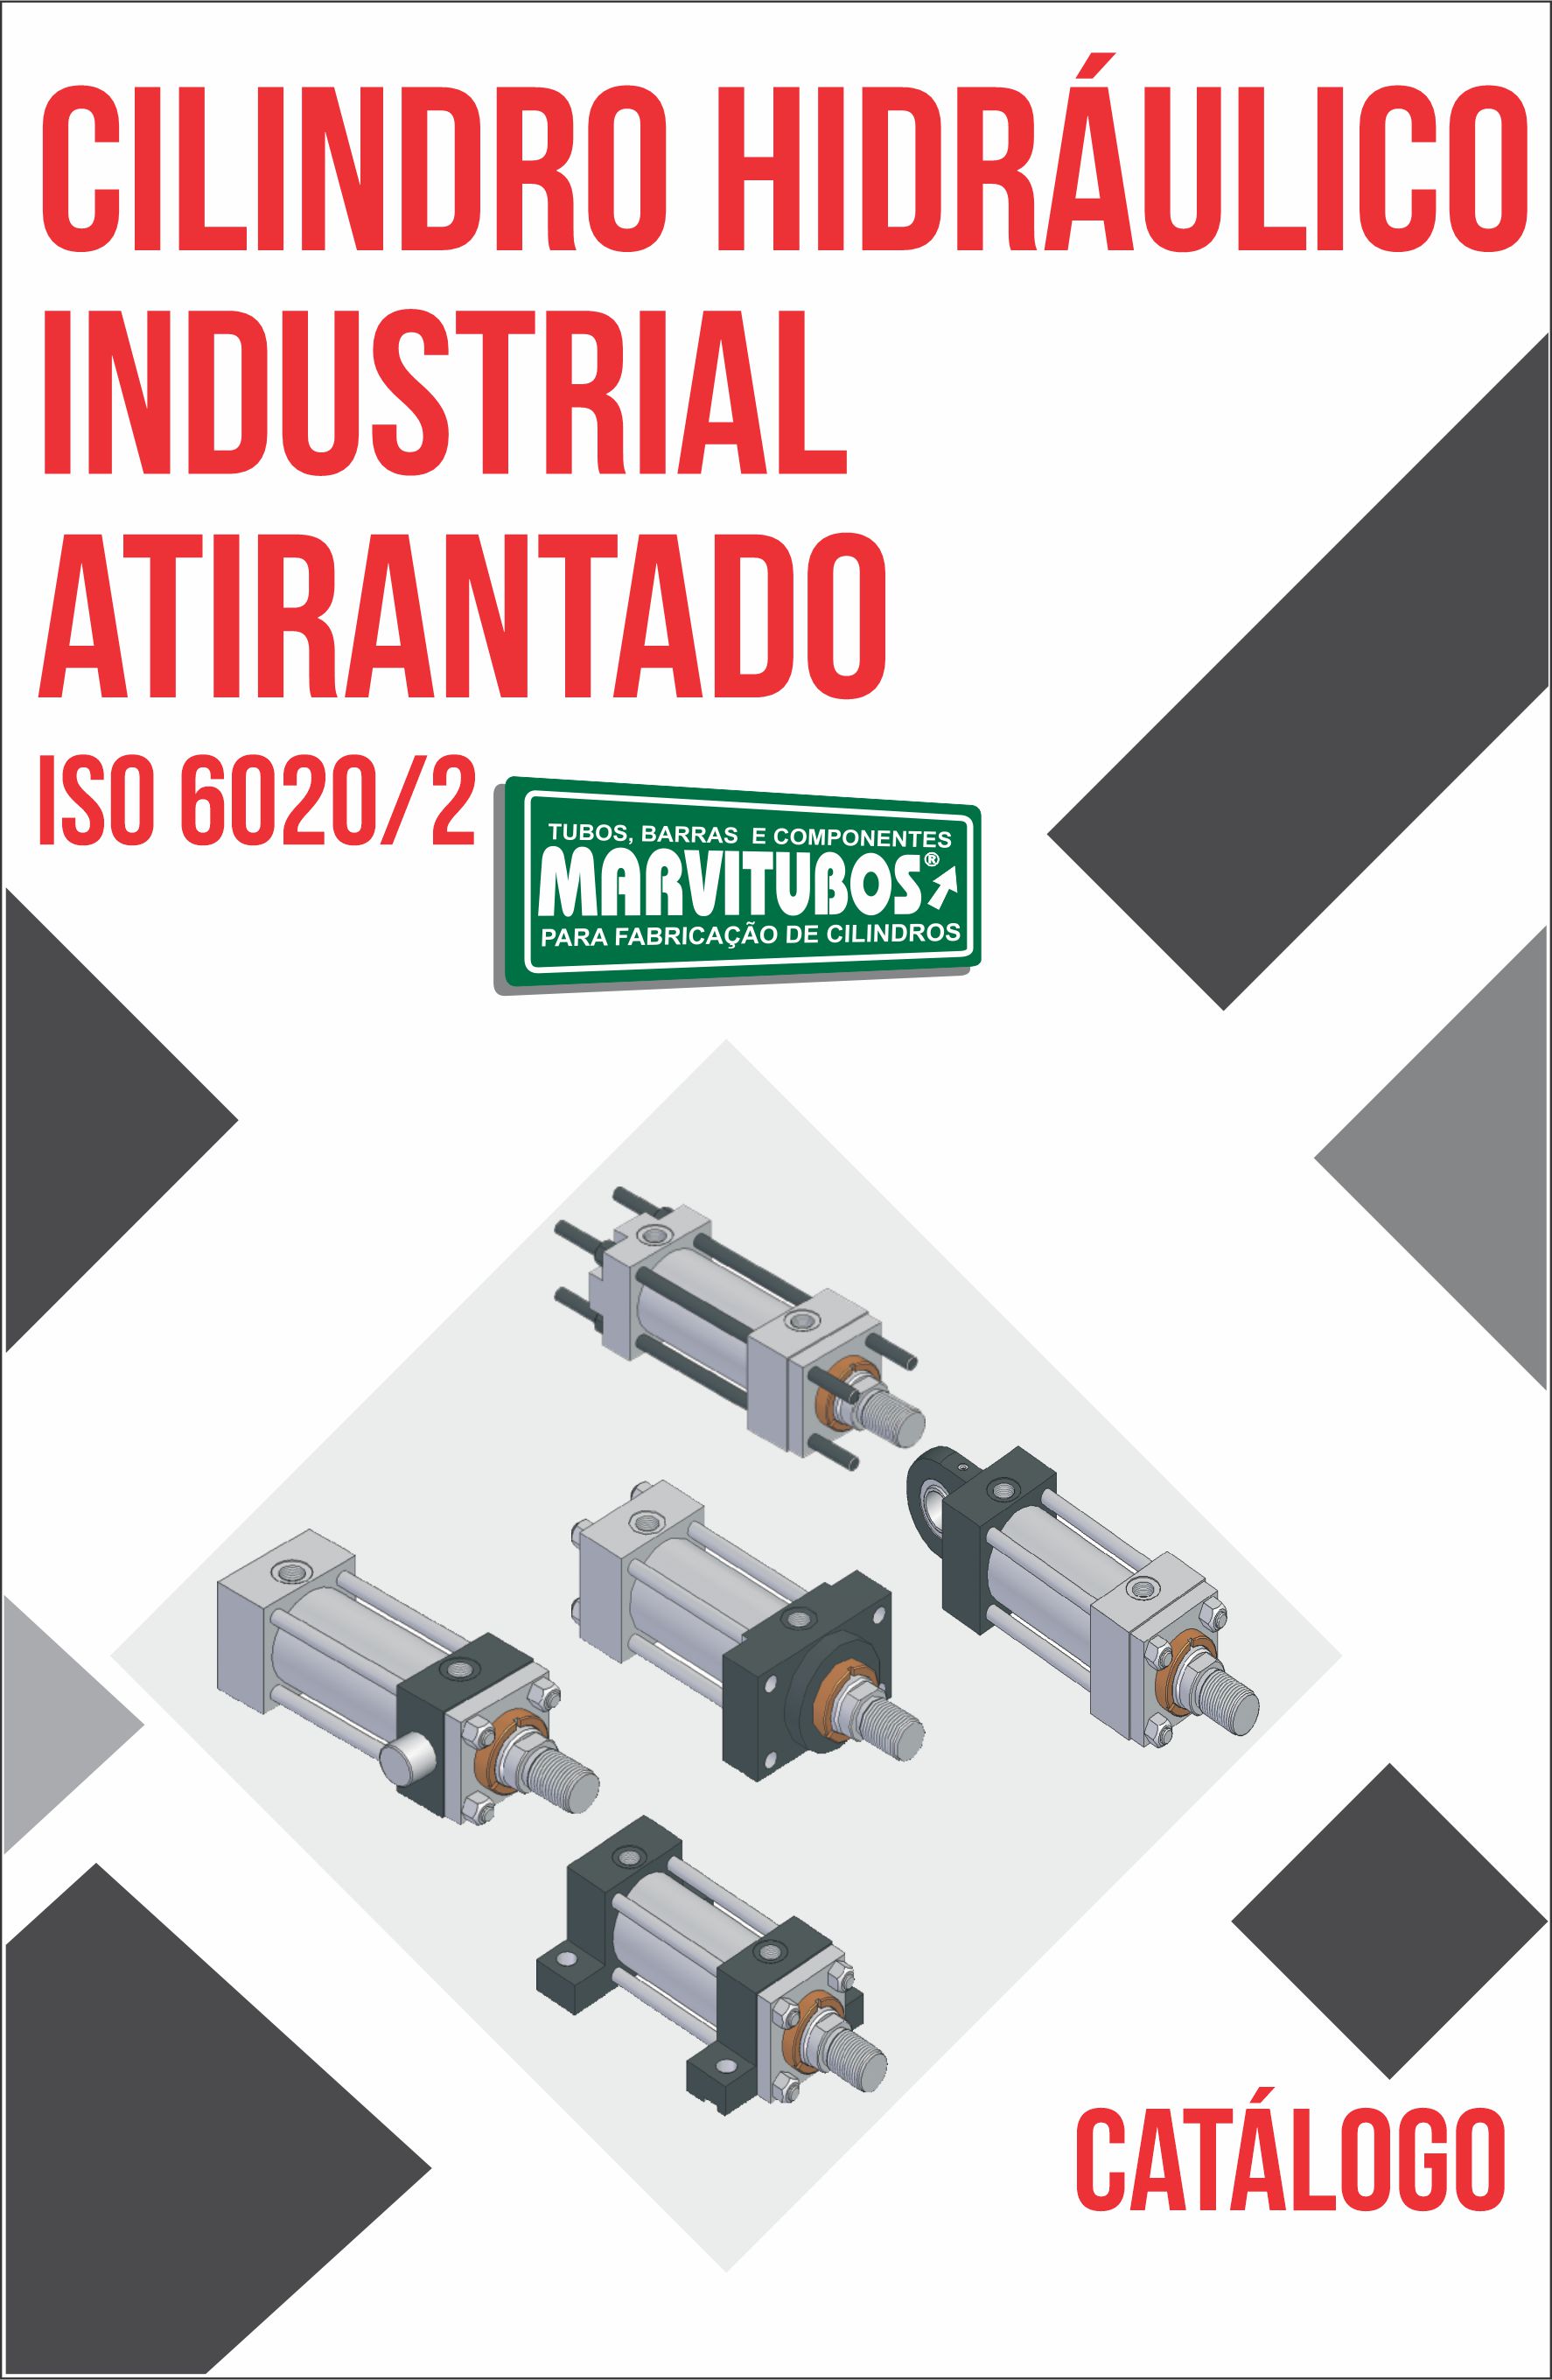 CALOGO DO CILINDRO HIDRULICO ATIRANTADO ISO 6020/2 - PRESSO: 160 BAR